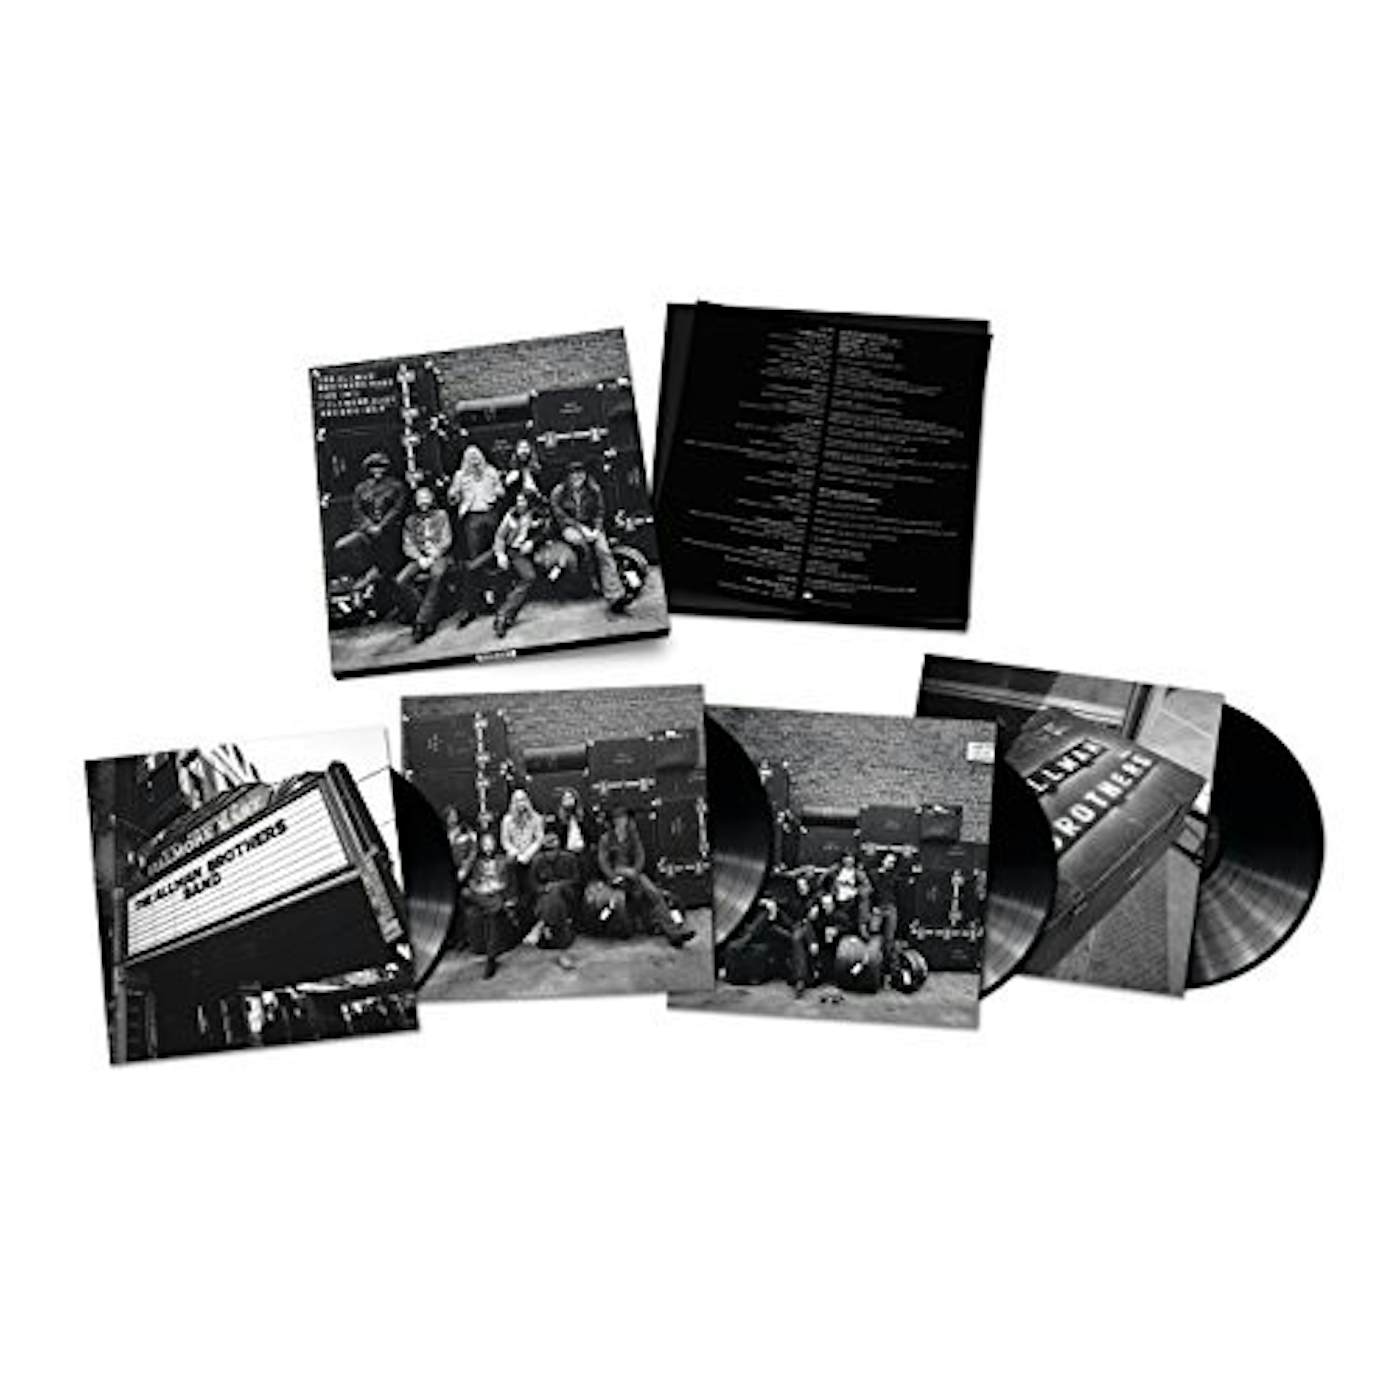 Allman Brothers Band 1971 FILLMORE EAST RECORDINGS Vinyl Record Box Set